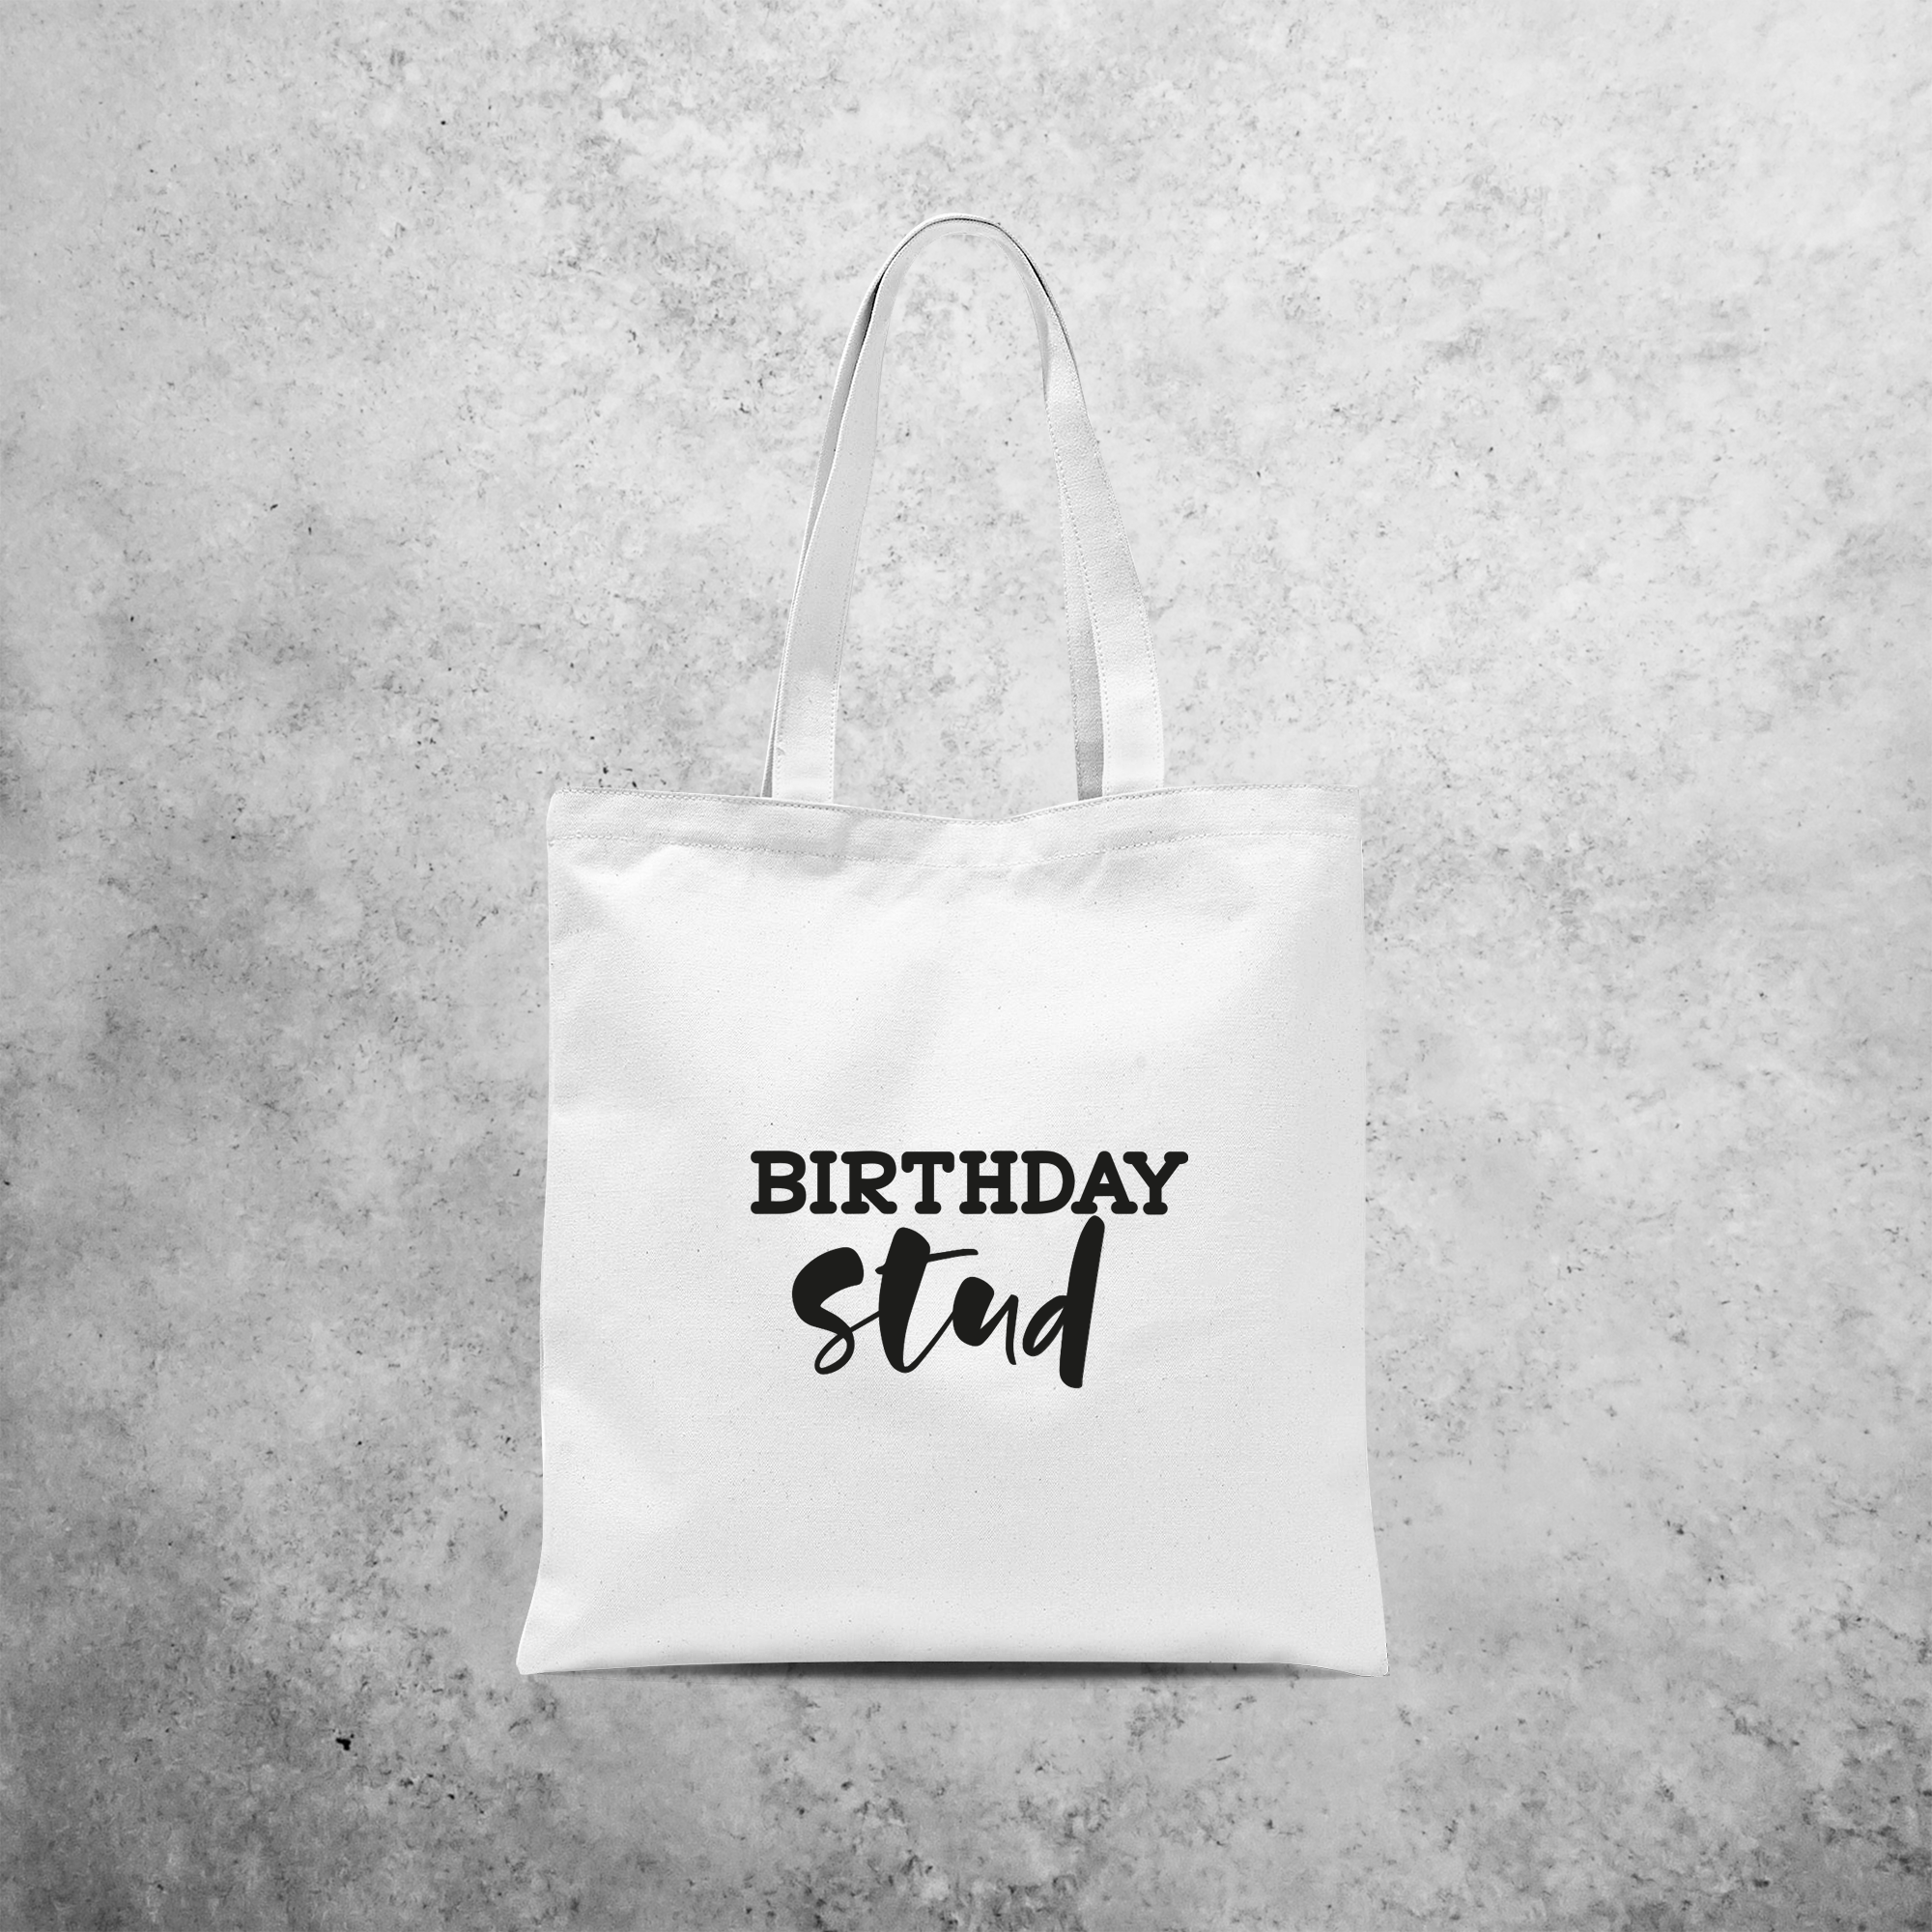 'Birthday stud' tote bag